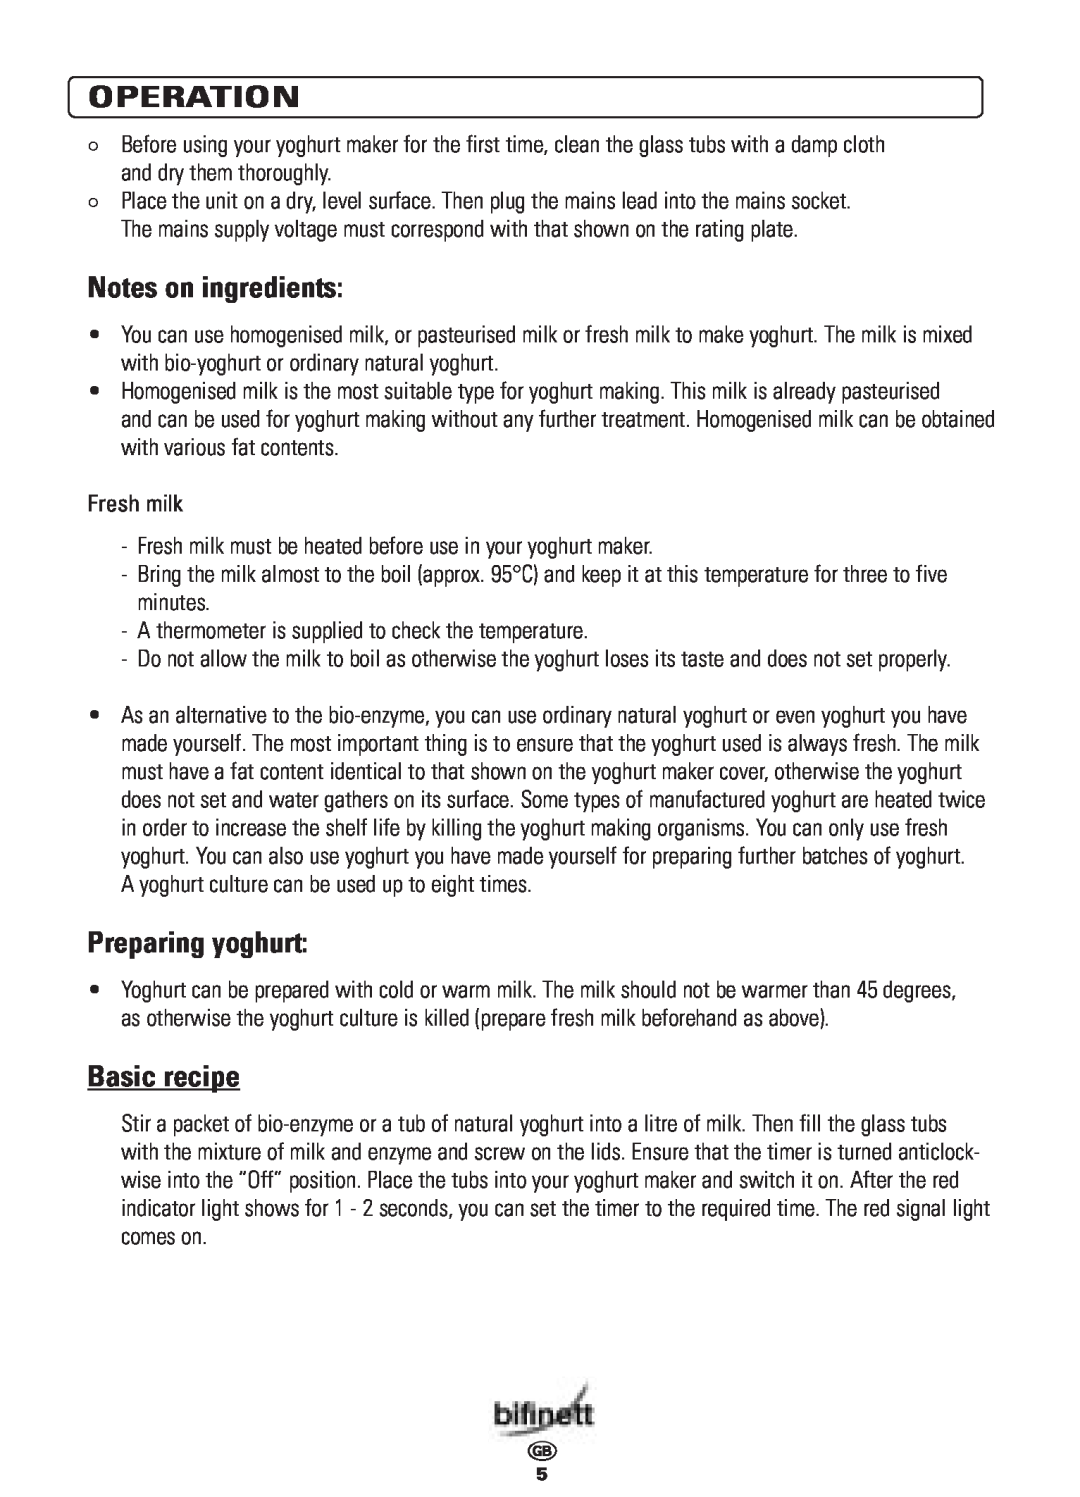 Bifinett KH 458 manual Operation, Notes on ingredients, Preparing yoghurt, Basic recipe 